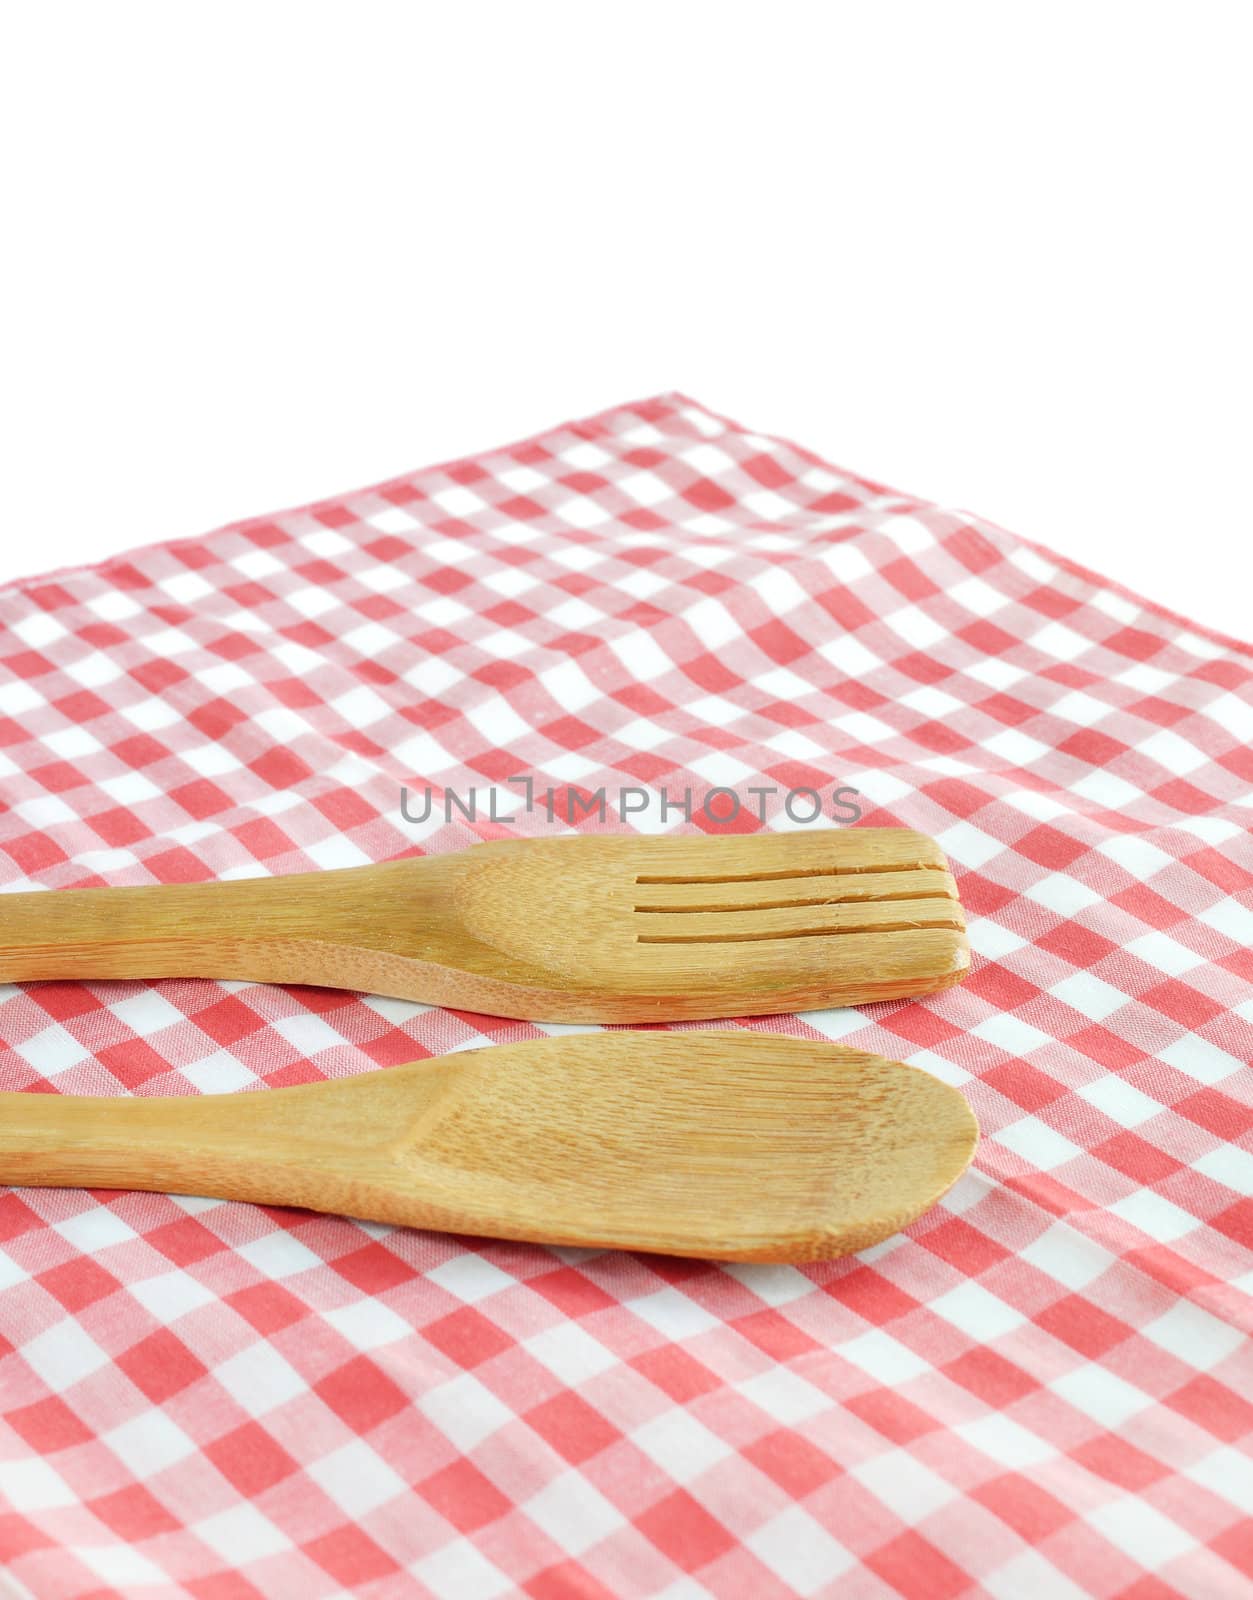 Wooden cooking utensils on napkin